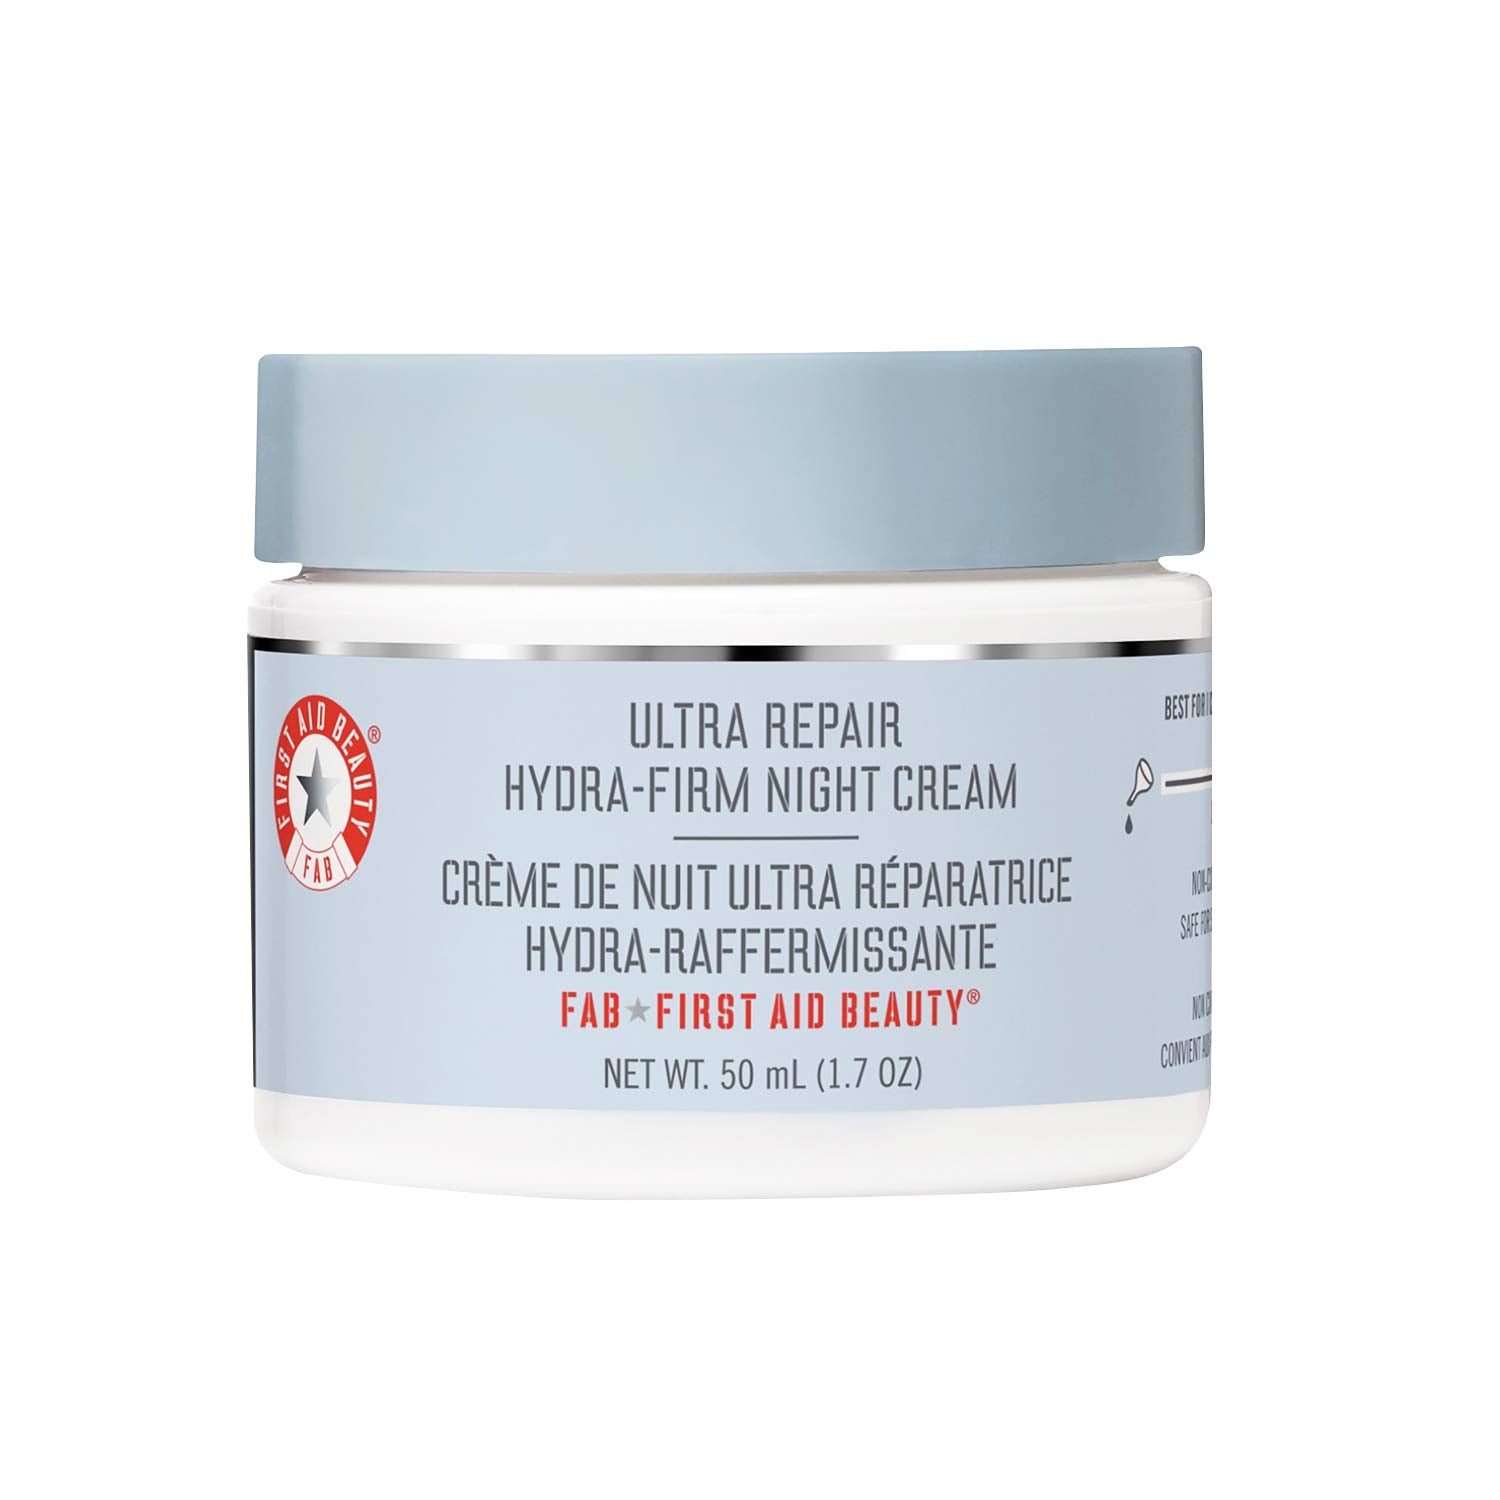 First Aid Beauty Ultra Repair Hydra-Firm Night Cream, Intense Nighttime Moisturizer – 1.7 Oz